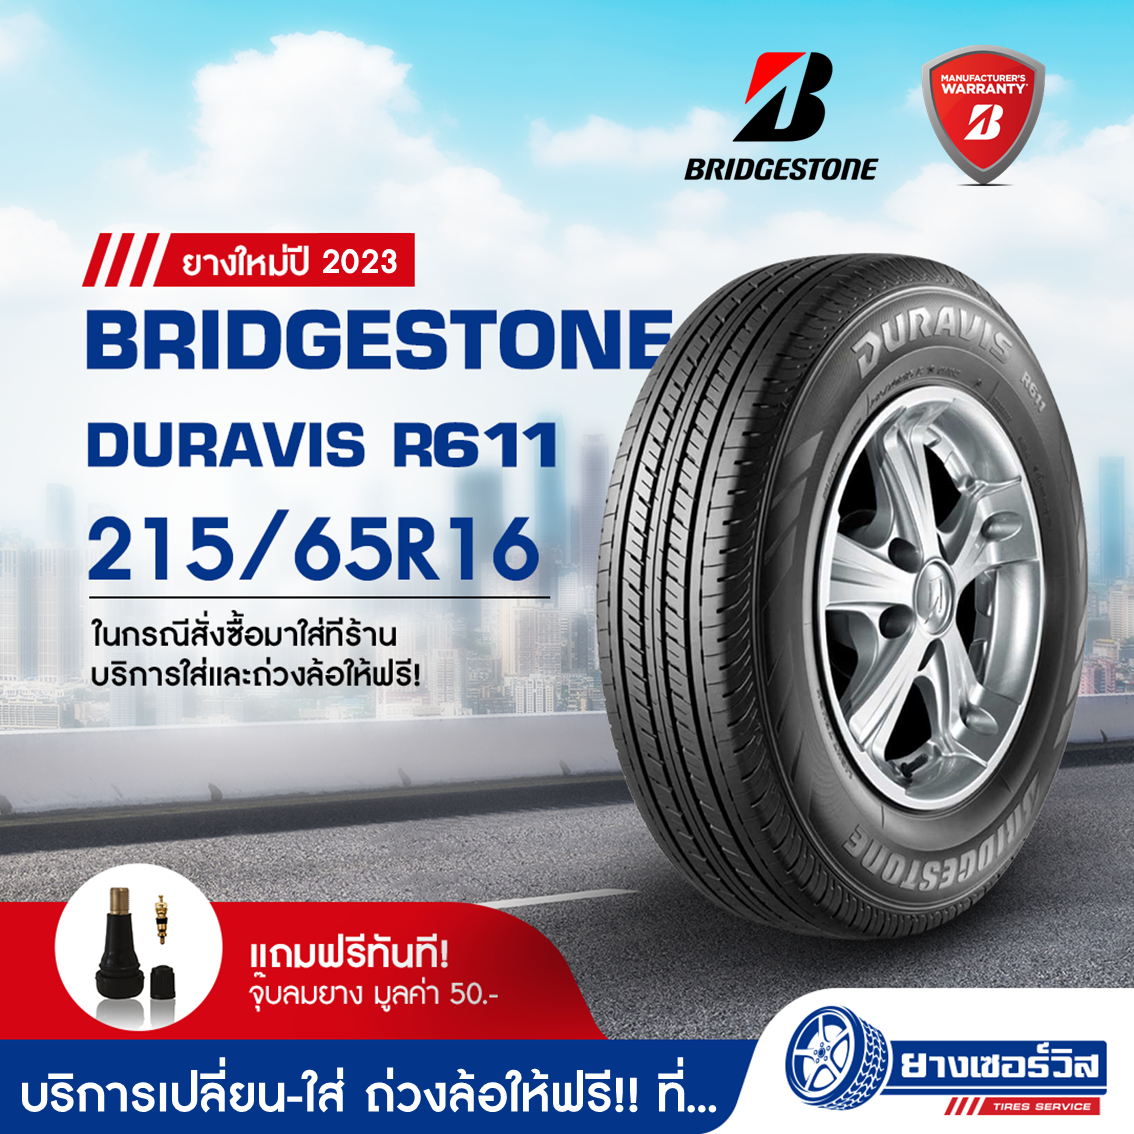 215/65R16 Bridgestone Duravis R611 (บริดจสโตน ดูราวิส อาร์ 611) ยางใหม่ปี2023 รับประกันคุณภาพ มาตรฐานส่งตรงถึงบ้านคุณ